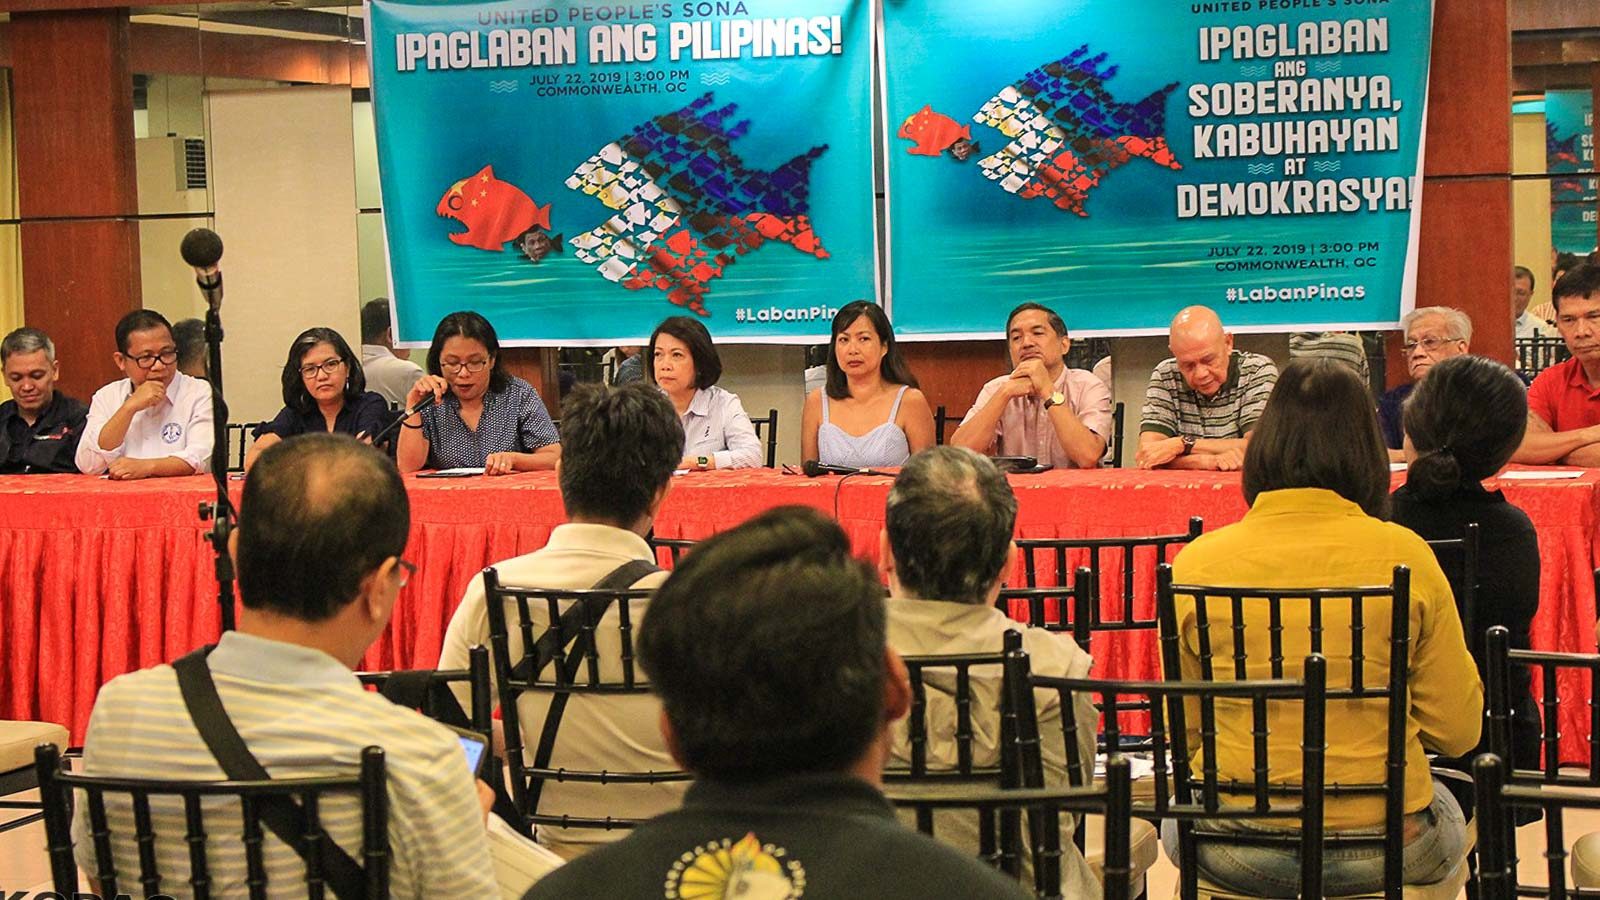 People’s SONA 2019 to unite for sovereignty, democracy vs Duterte